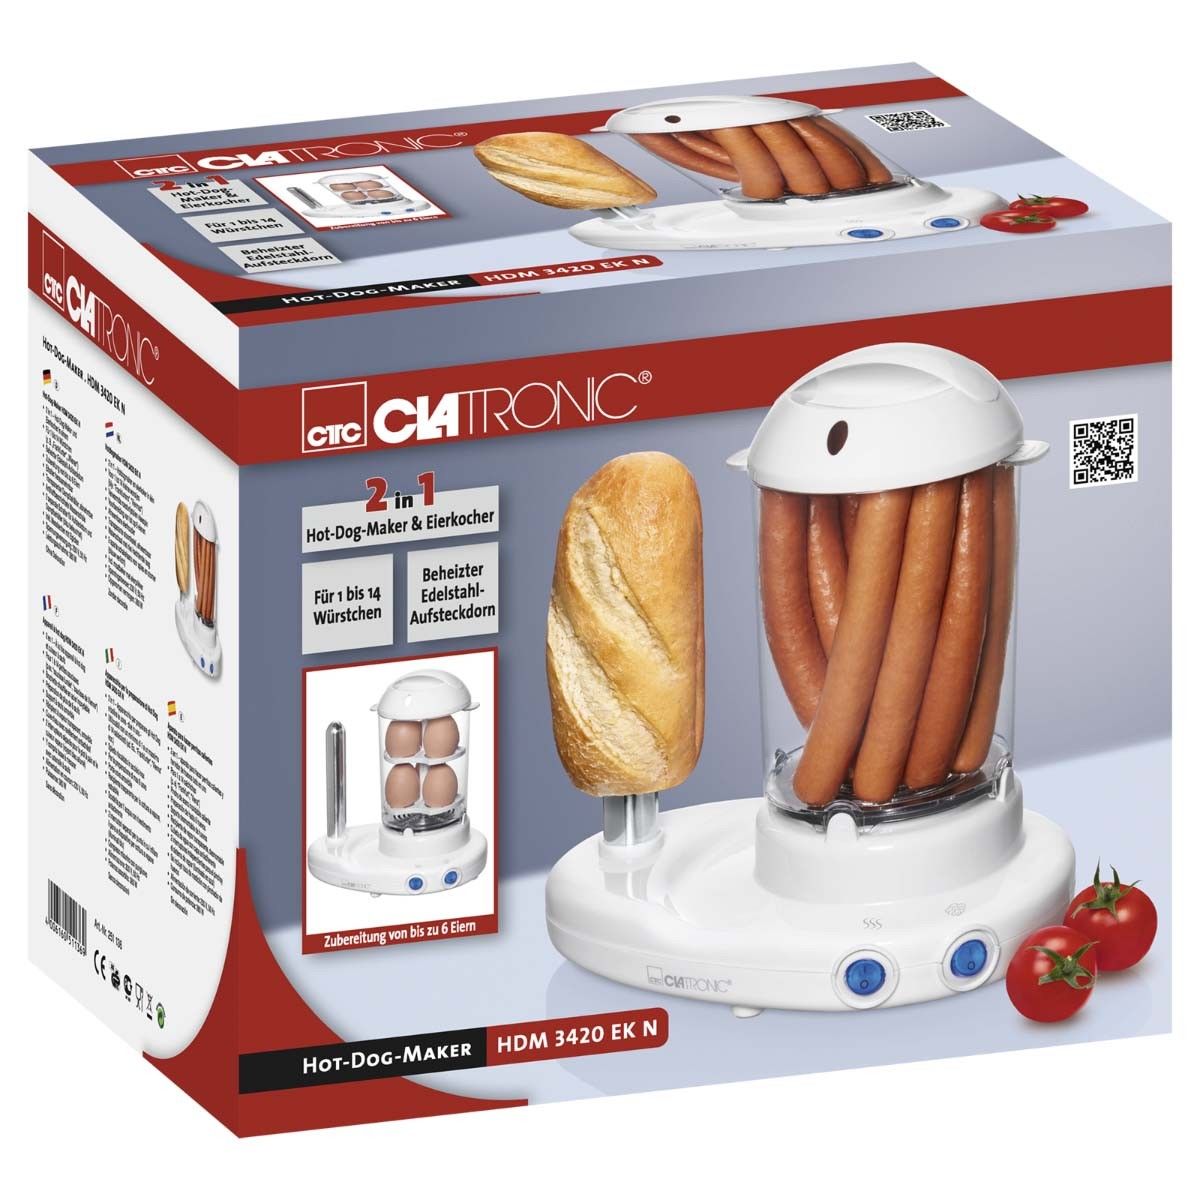 Hot-Dog-Maker/Eierkocher CTC HDM 3420 EK N ws